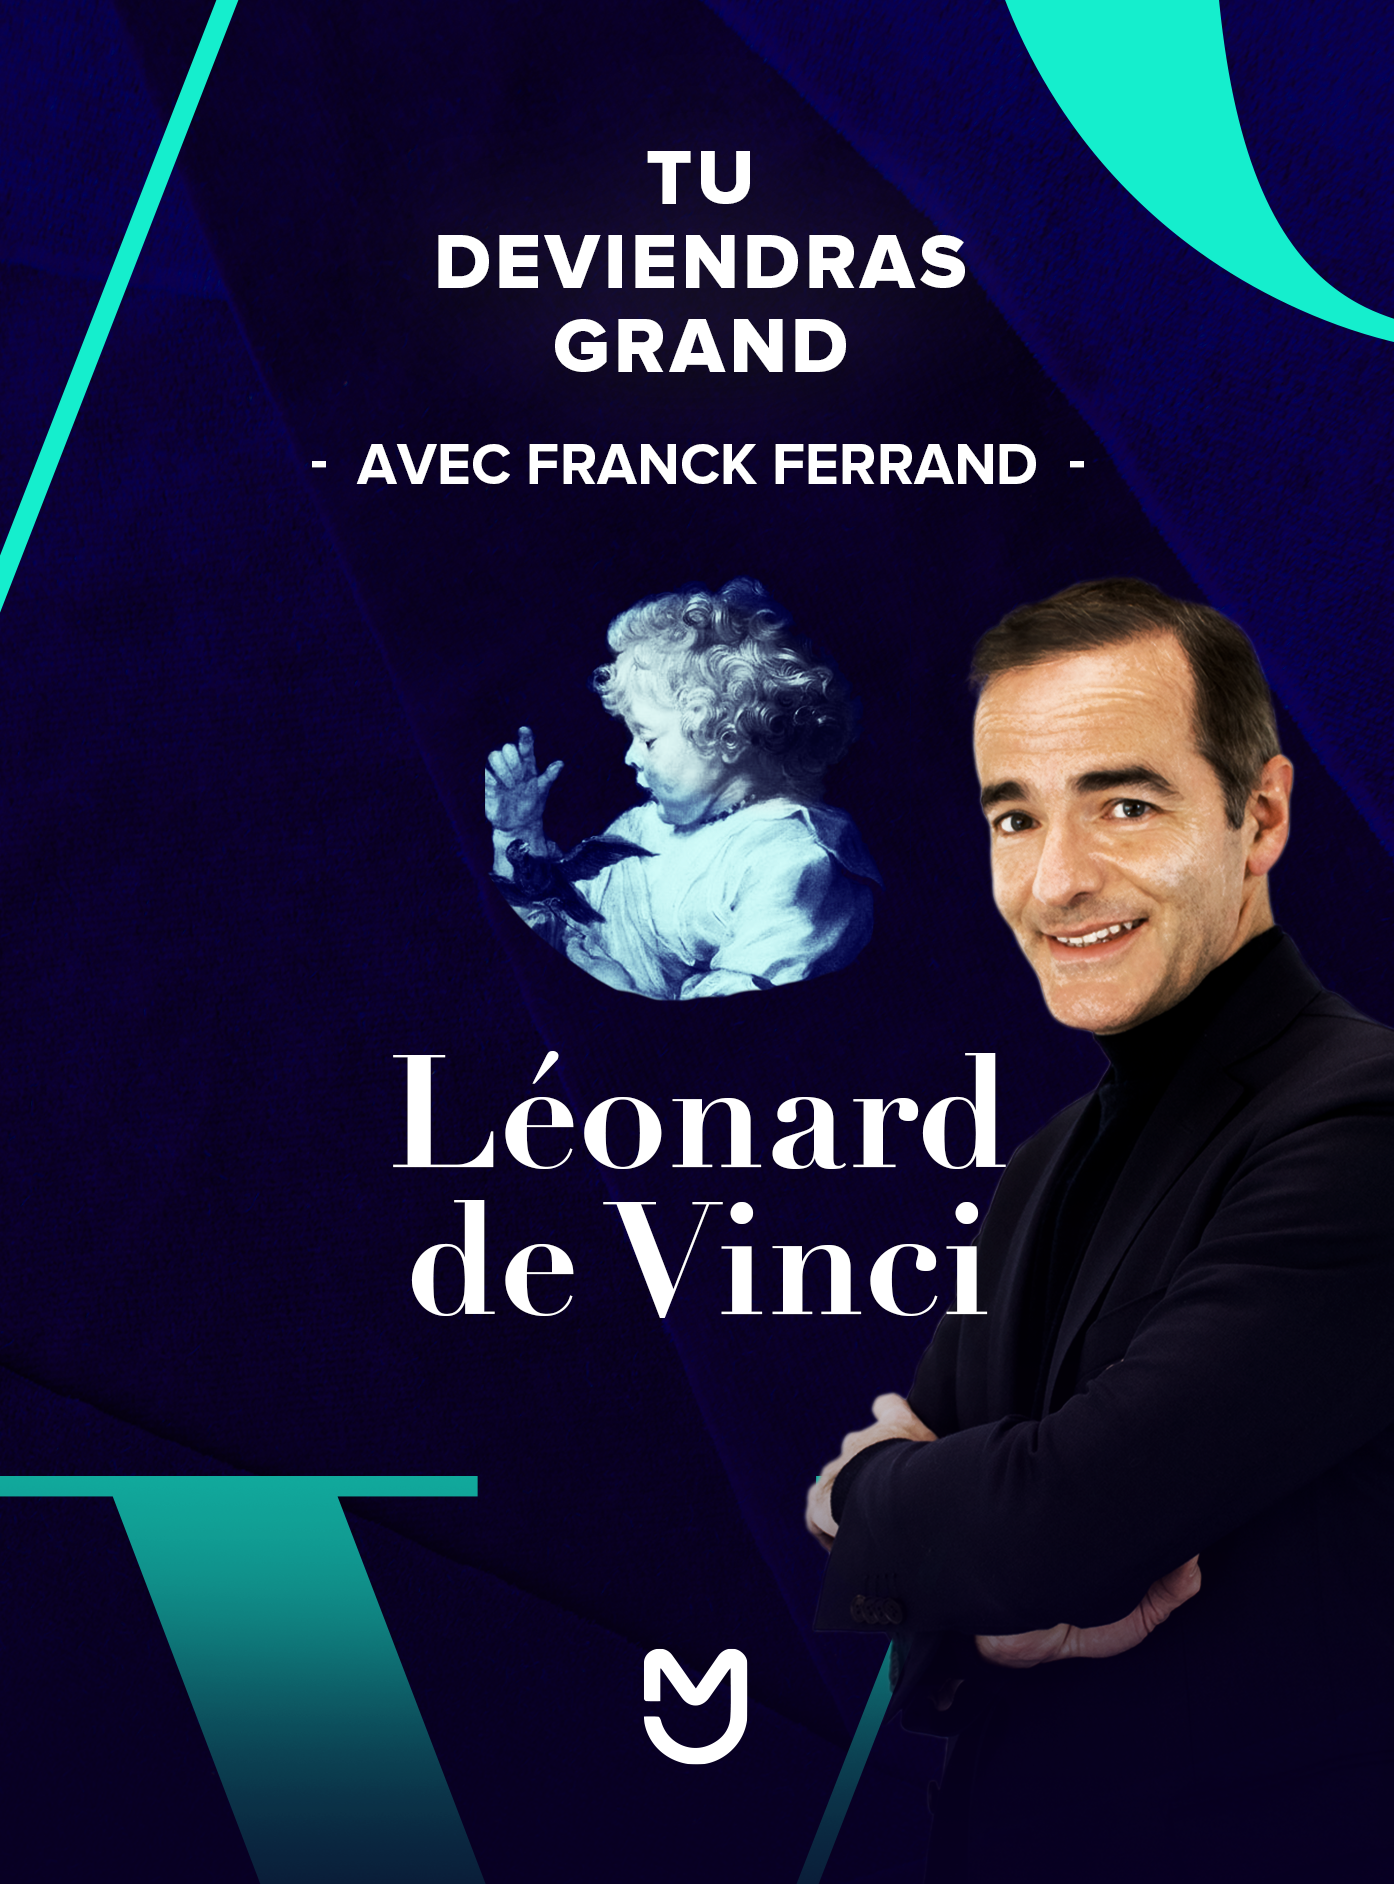 Franck Ferrand, Léonard de Vinci